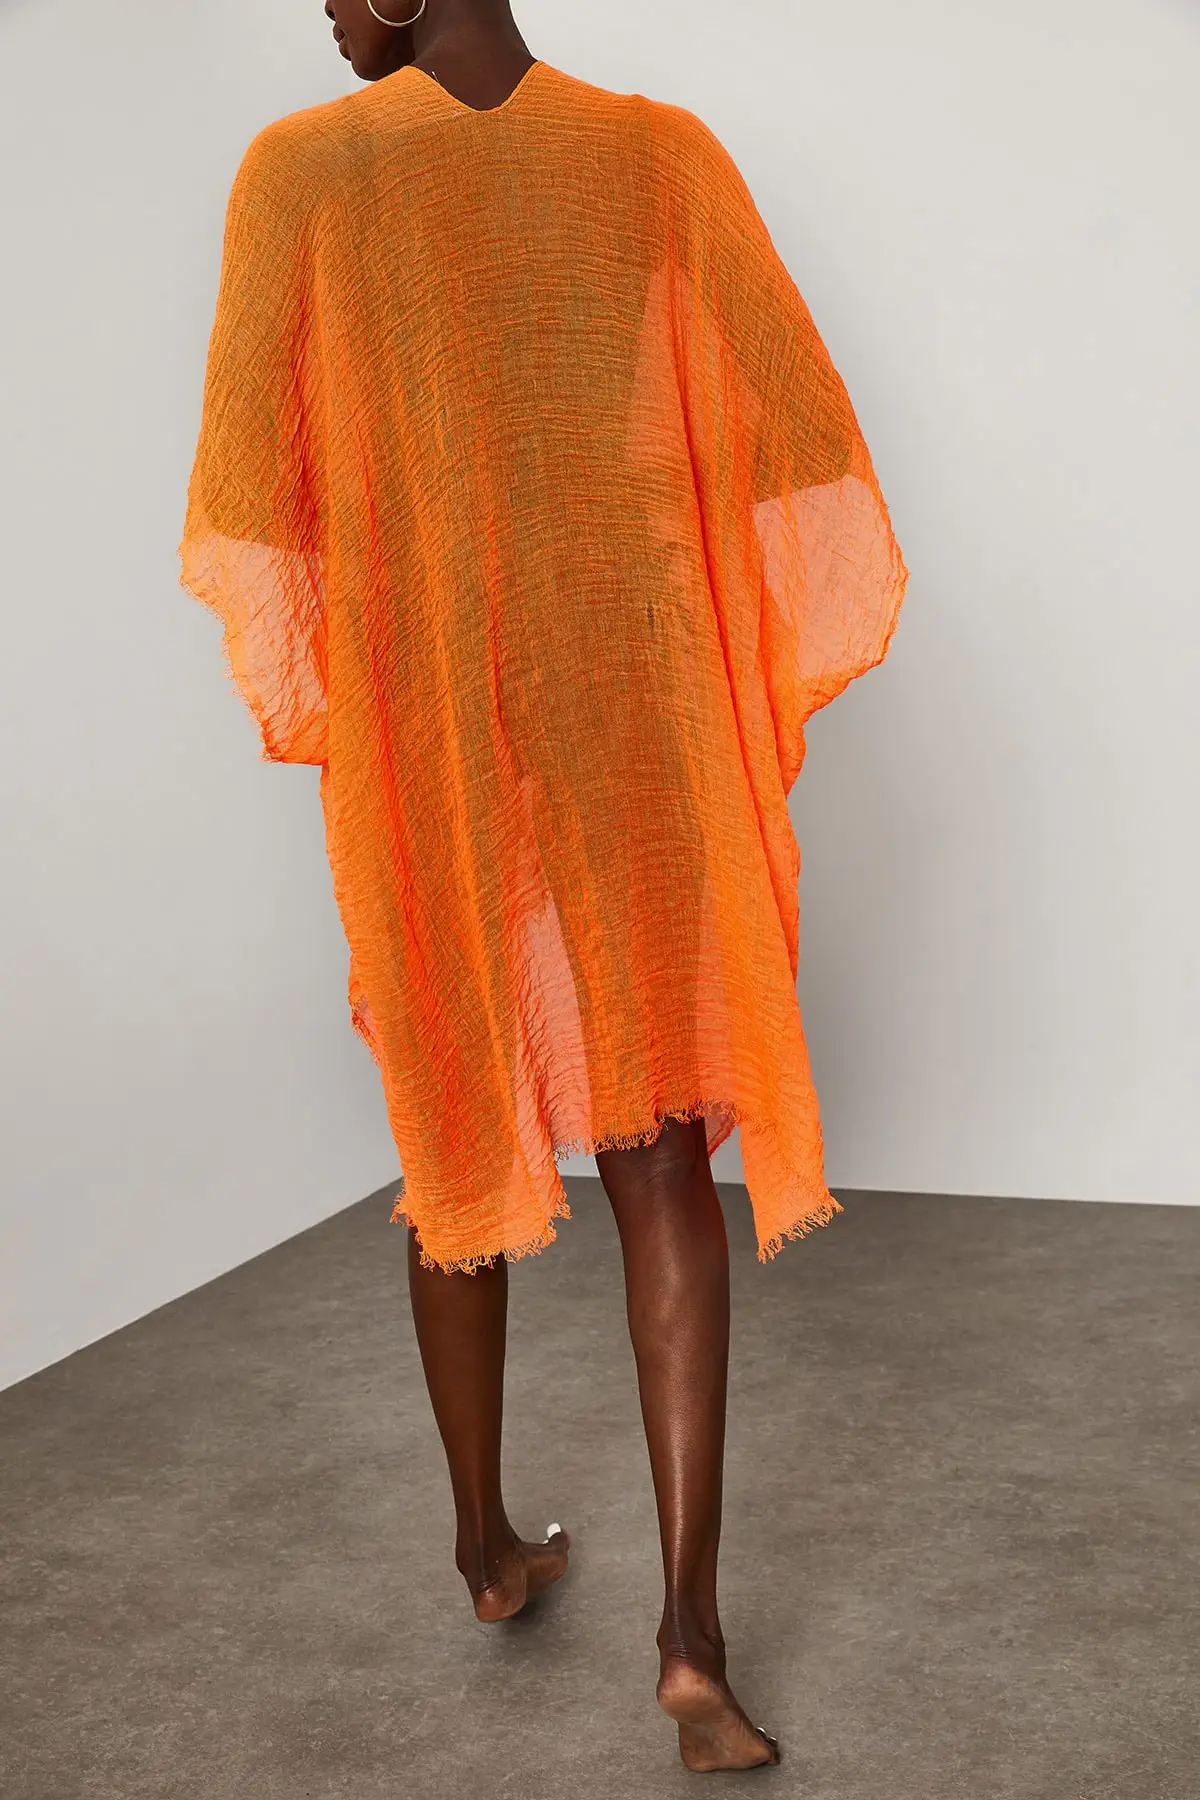 summer beach maxi dresses Beach Dress Pareo Female orange as well as ripwatered fabric pareo bikini bottom cover up